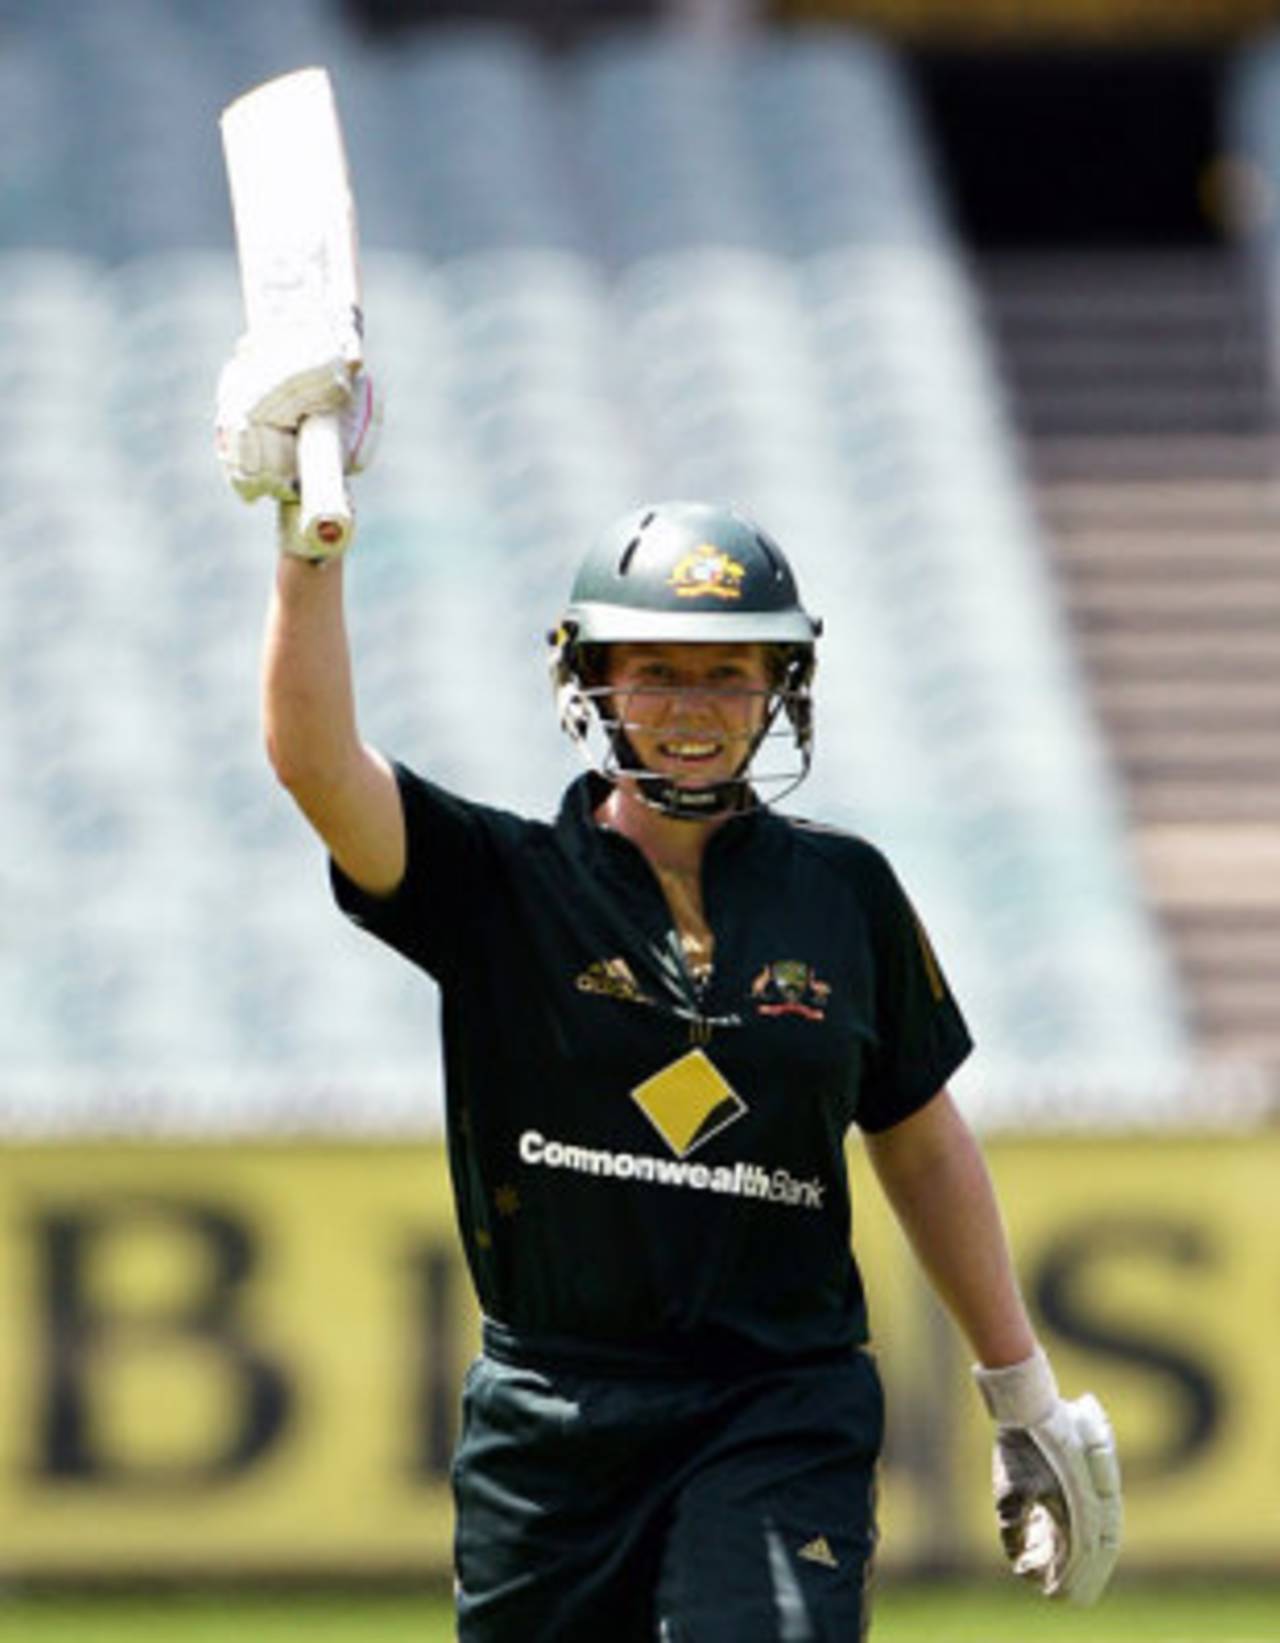 Alex Blackwell raises her bat after getting her maiden one-day hundred, Australia women v England women, 2nd ODI, Melbourne, February 4, 2008